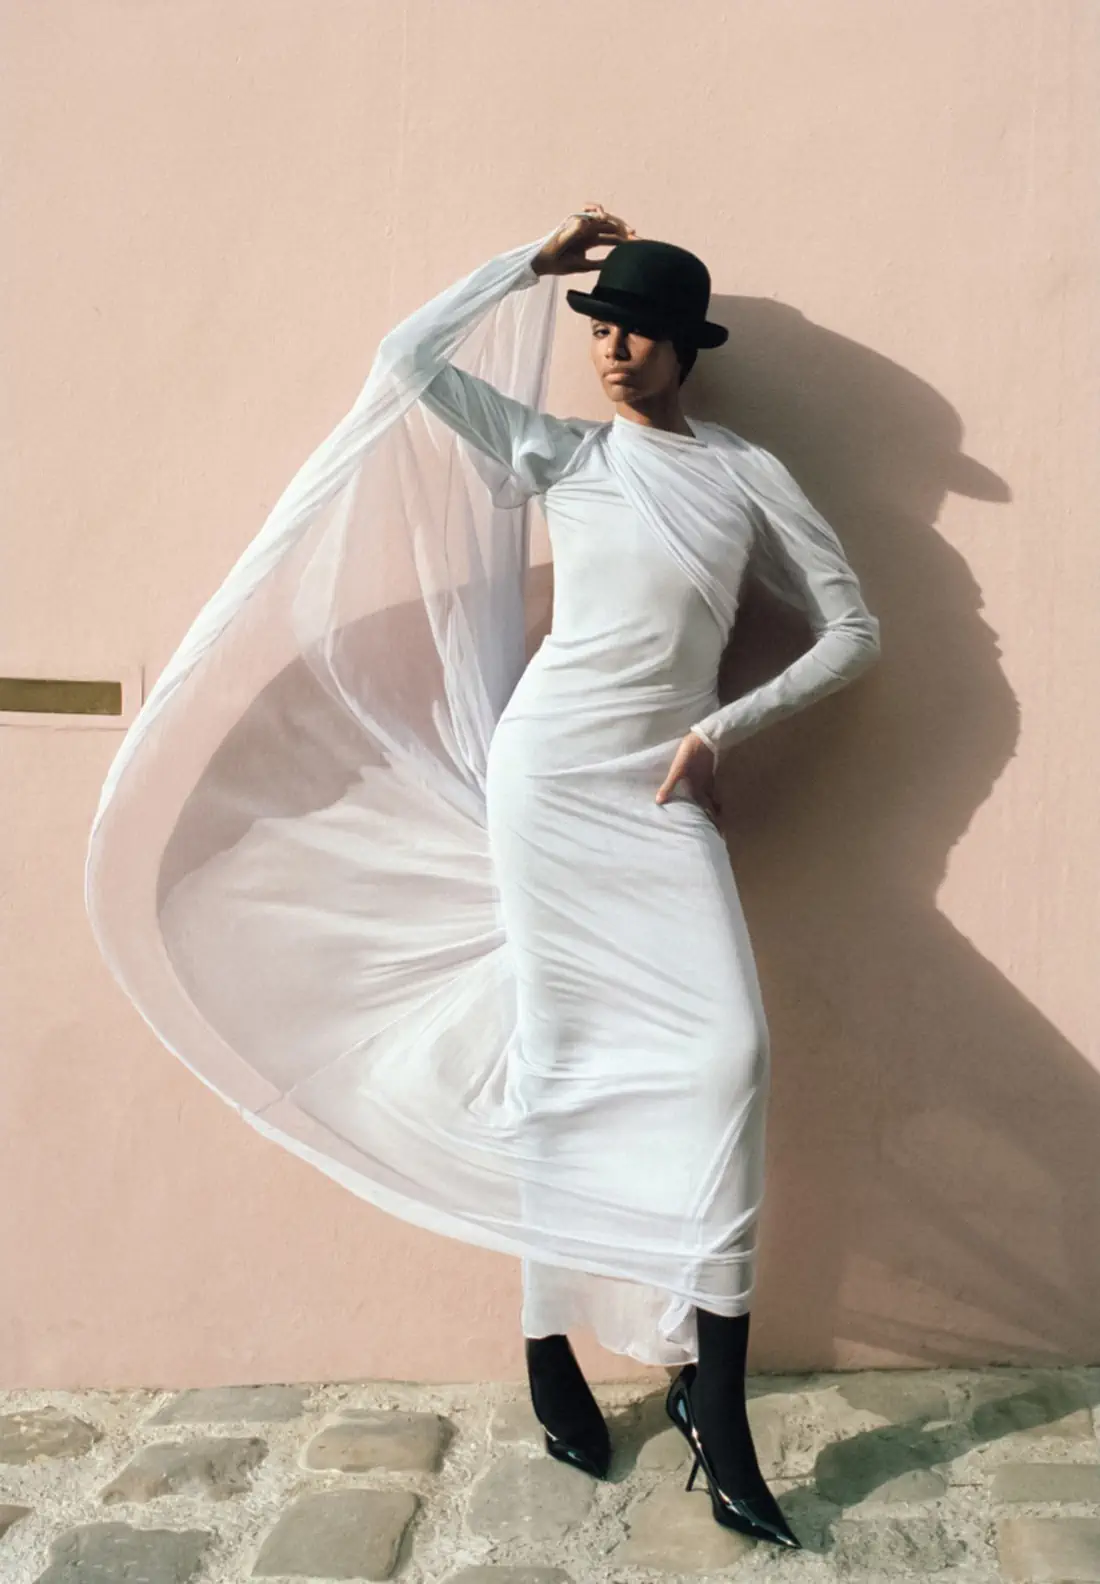 Malika El Maslouhi covers Vogue France October 2023 by Malick Bodian